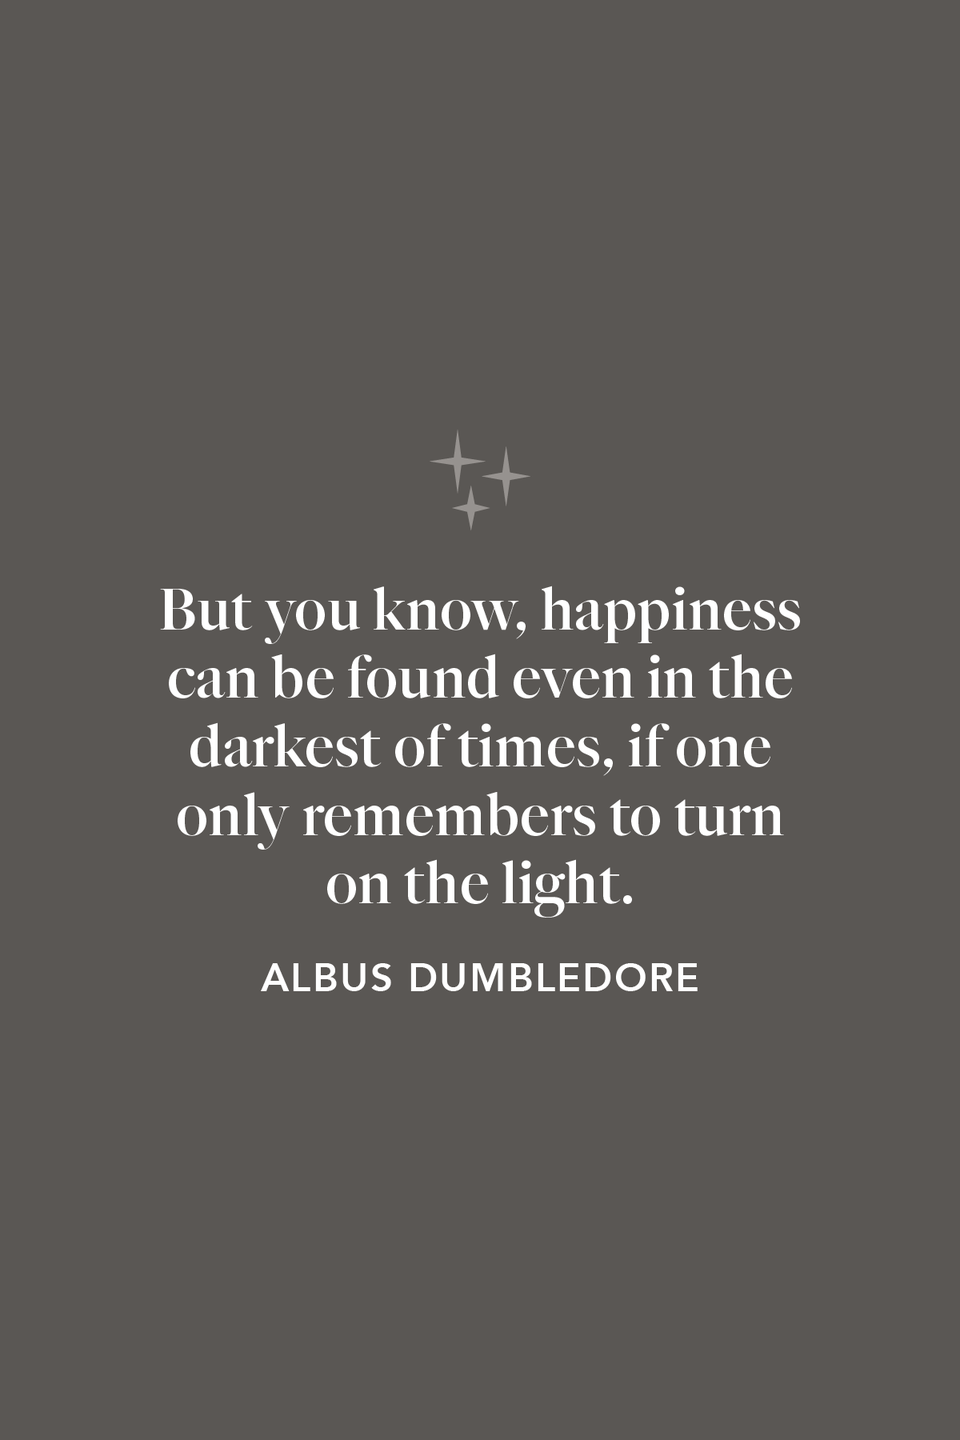 Dumbledore on light and joy